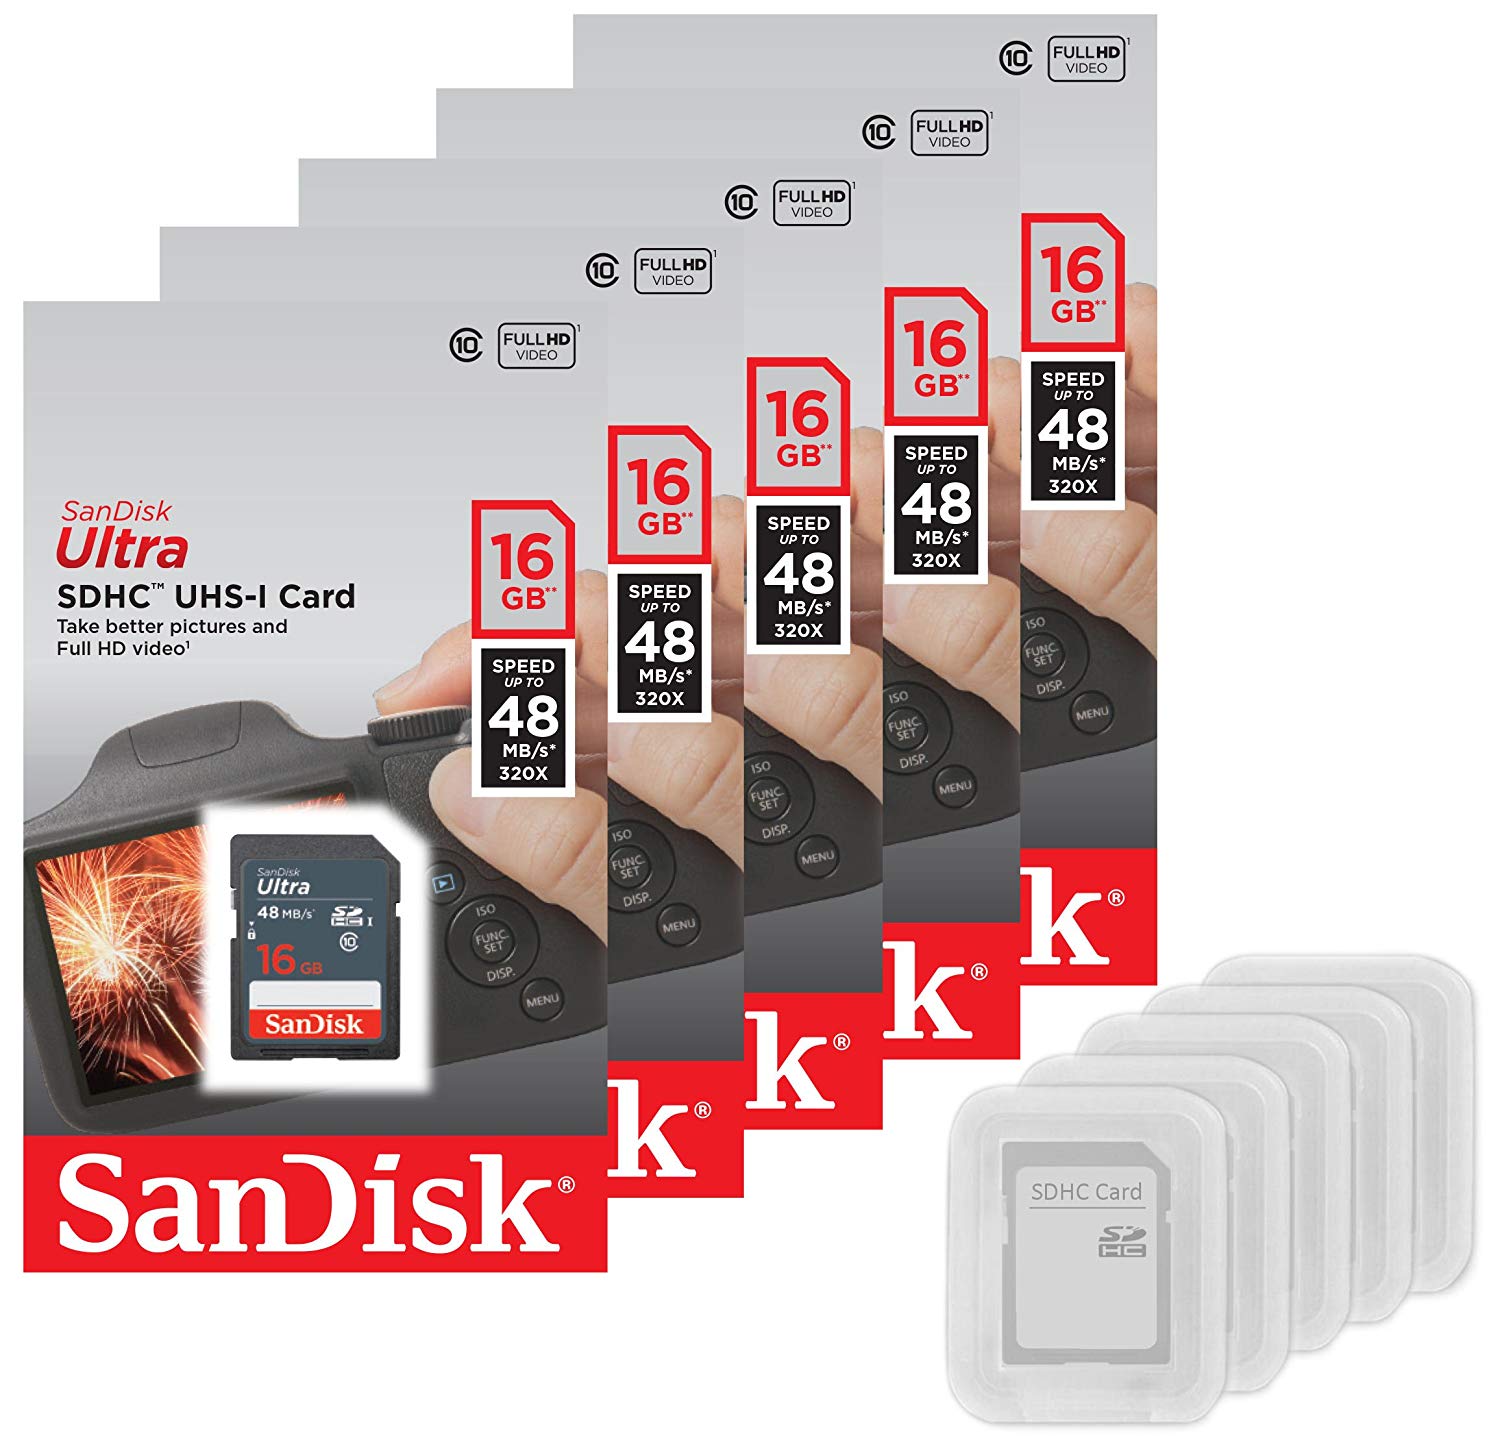 SanDisk 16GB SDHC Ultra UHS-1 Memory Card